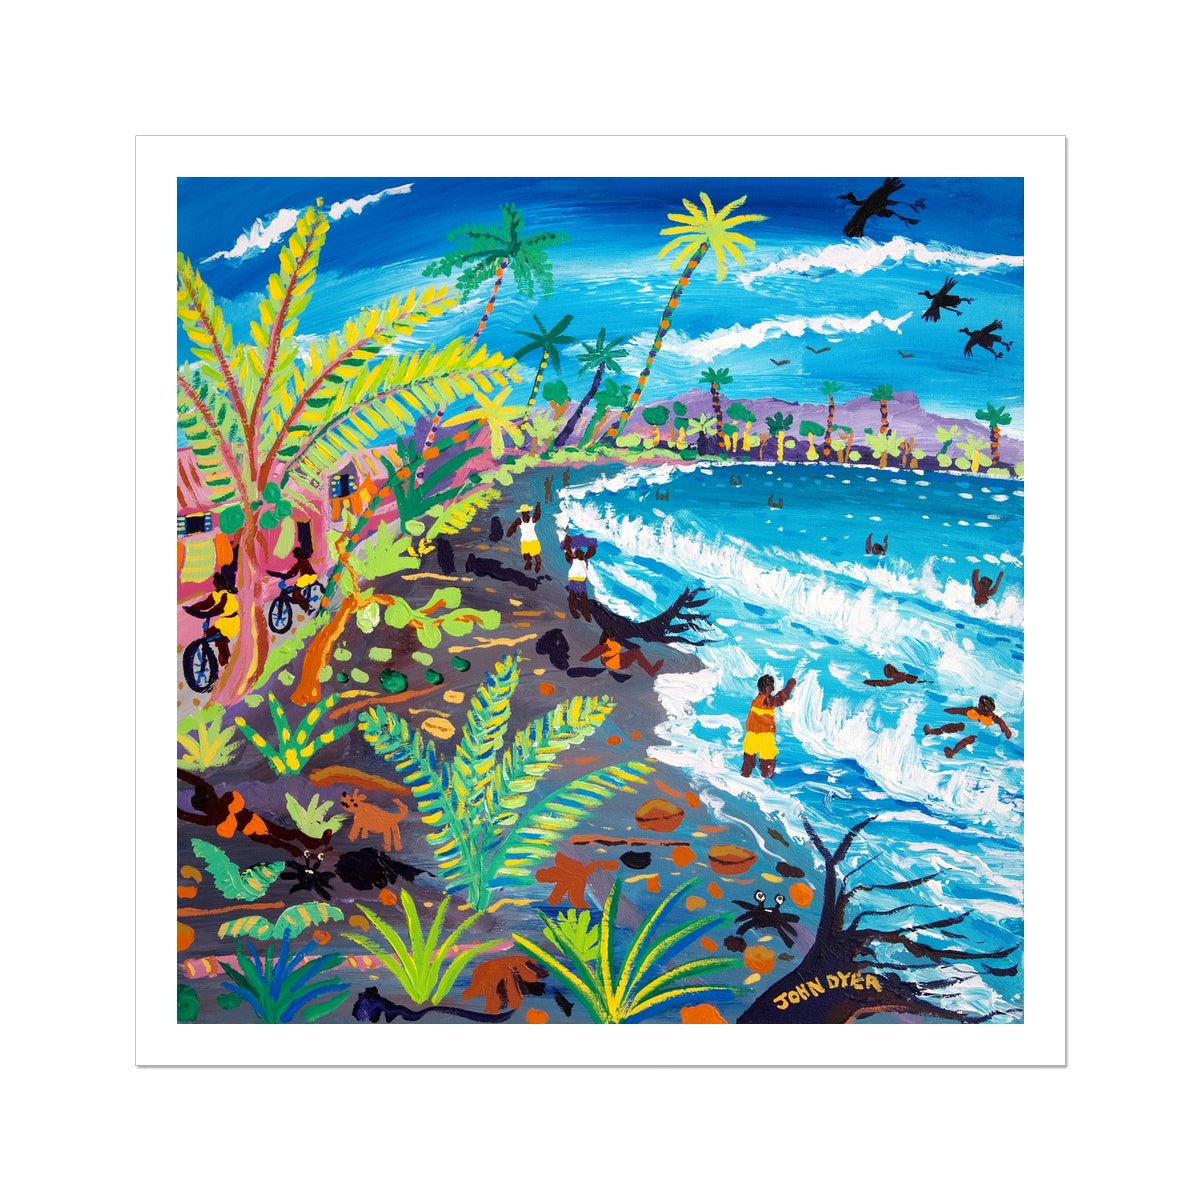 John Dyer Fine Art Print. Open Edition Cornish Art Print. 'Caribbean Beach Life, Costa Rica'. Caribbean Art Gallery